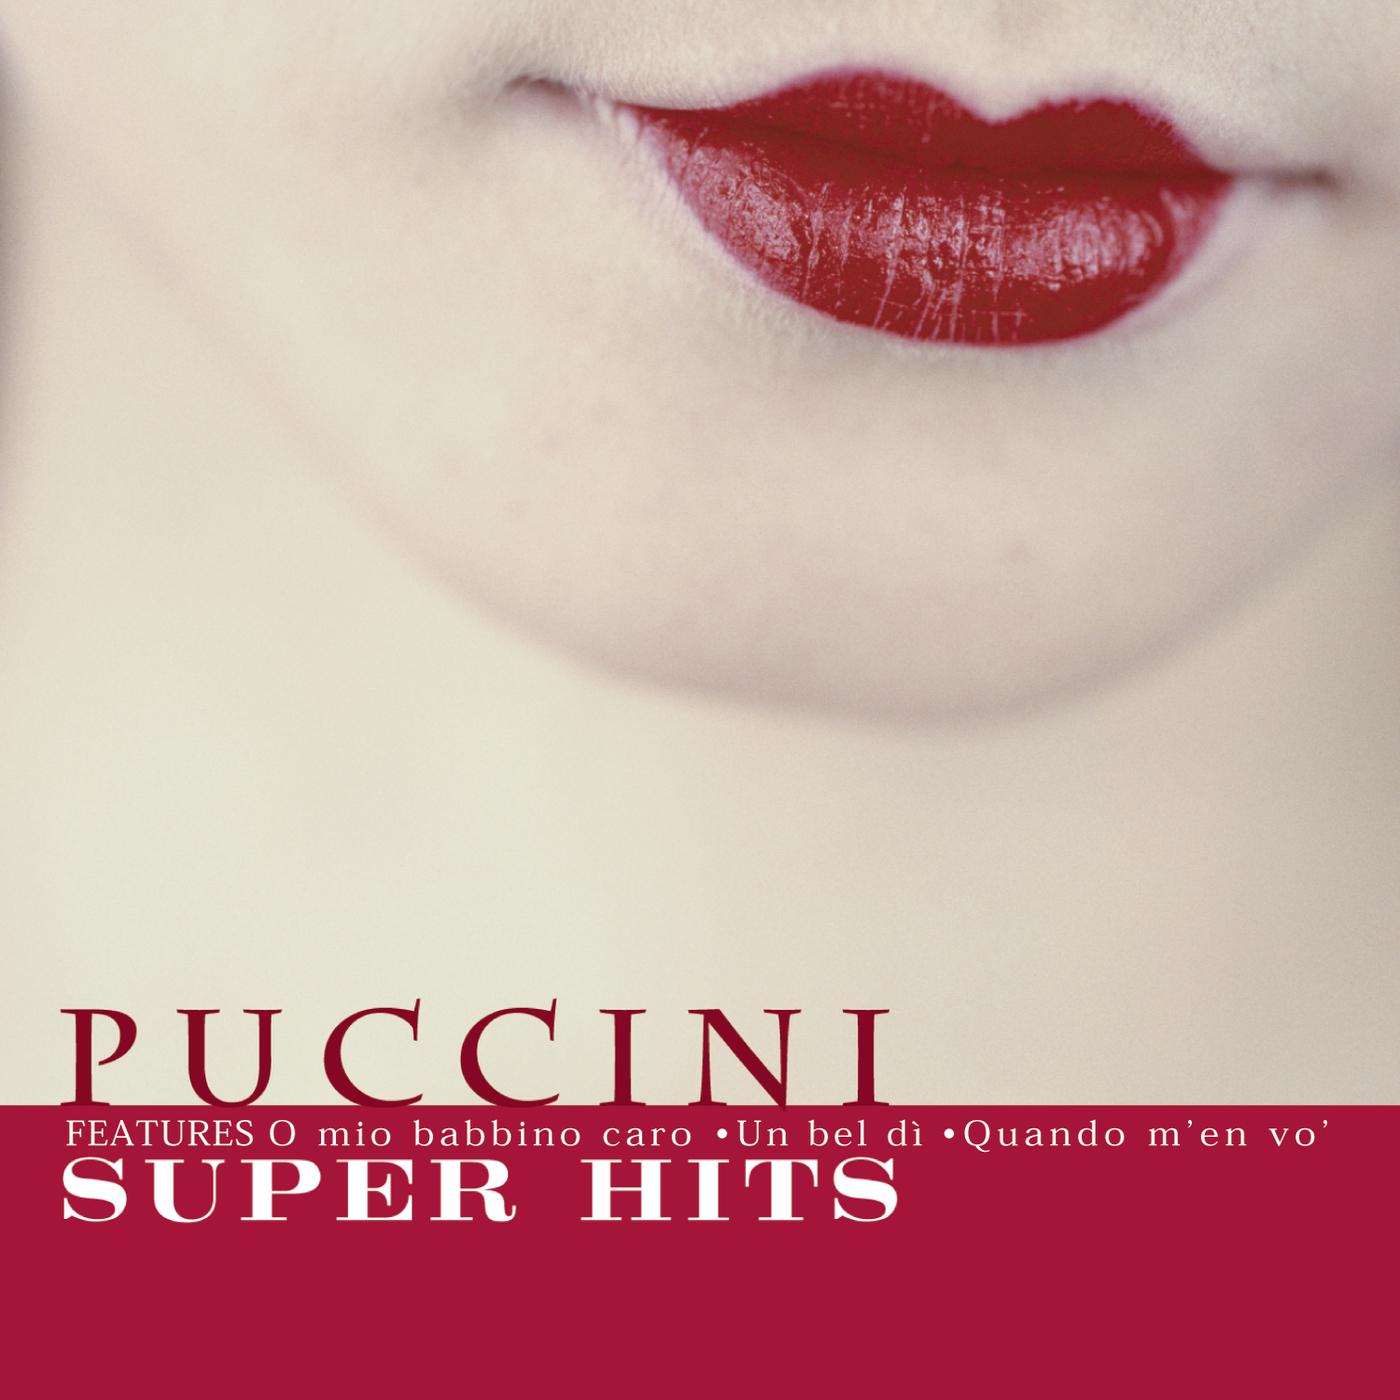 Puccini Super Hits